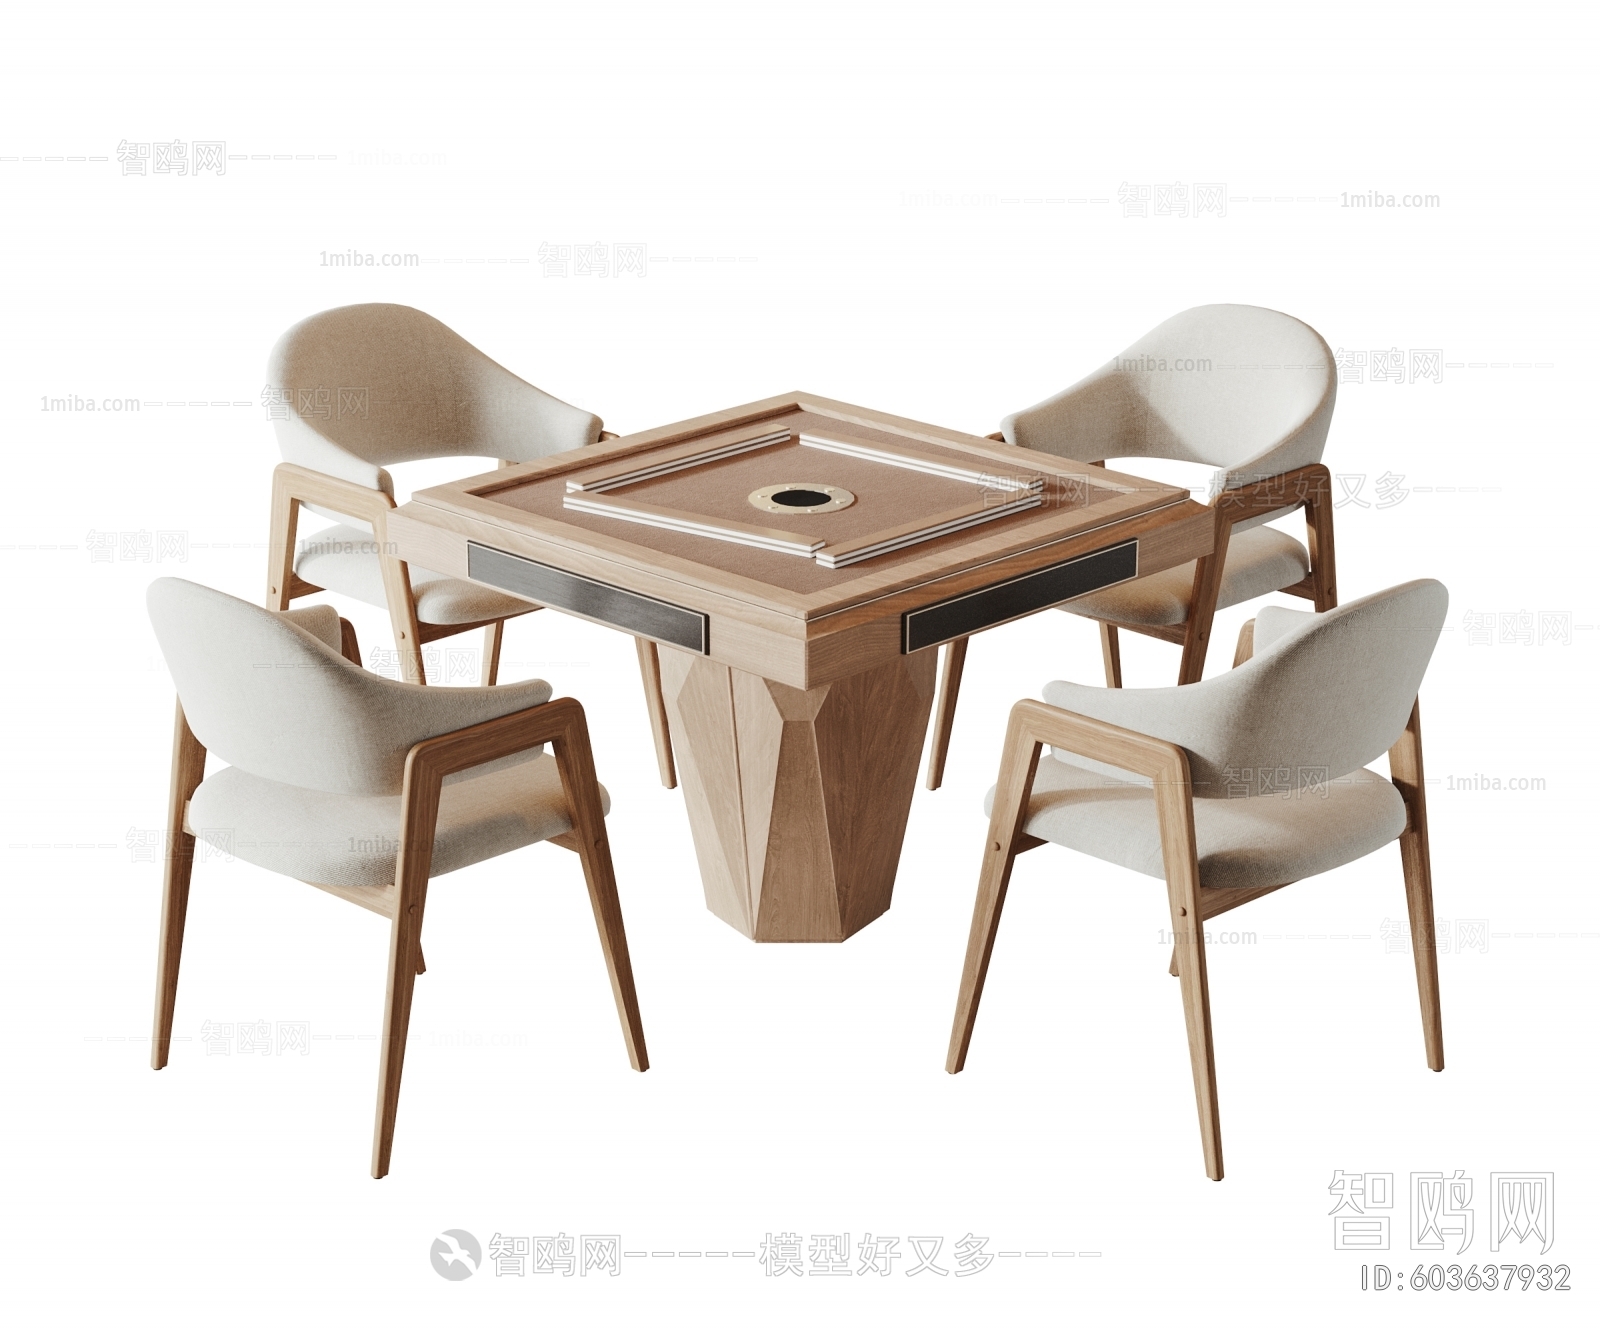 Wabi-sabi Style Other Table